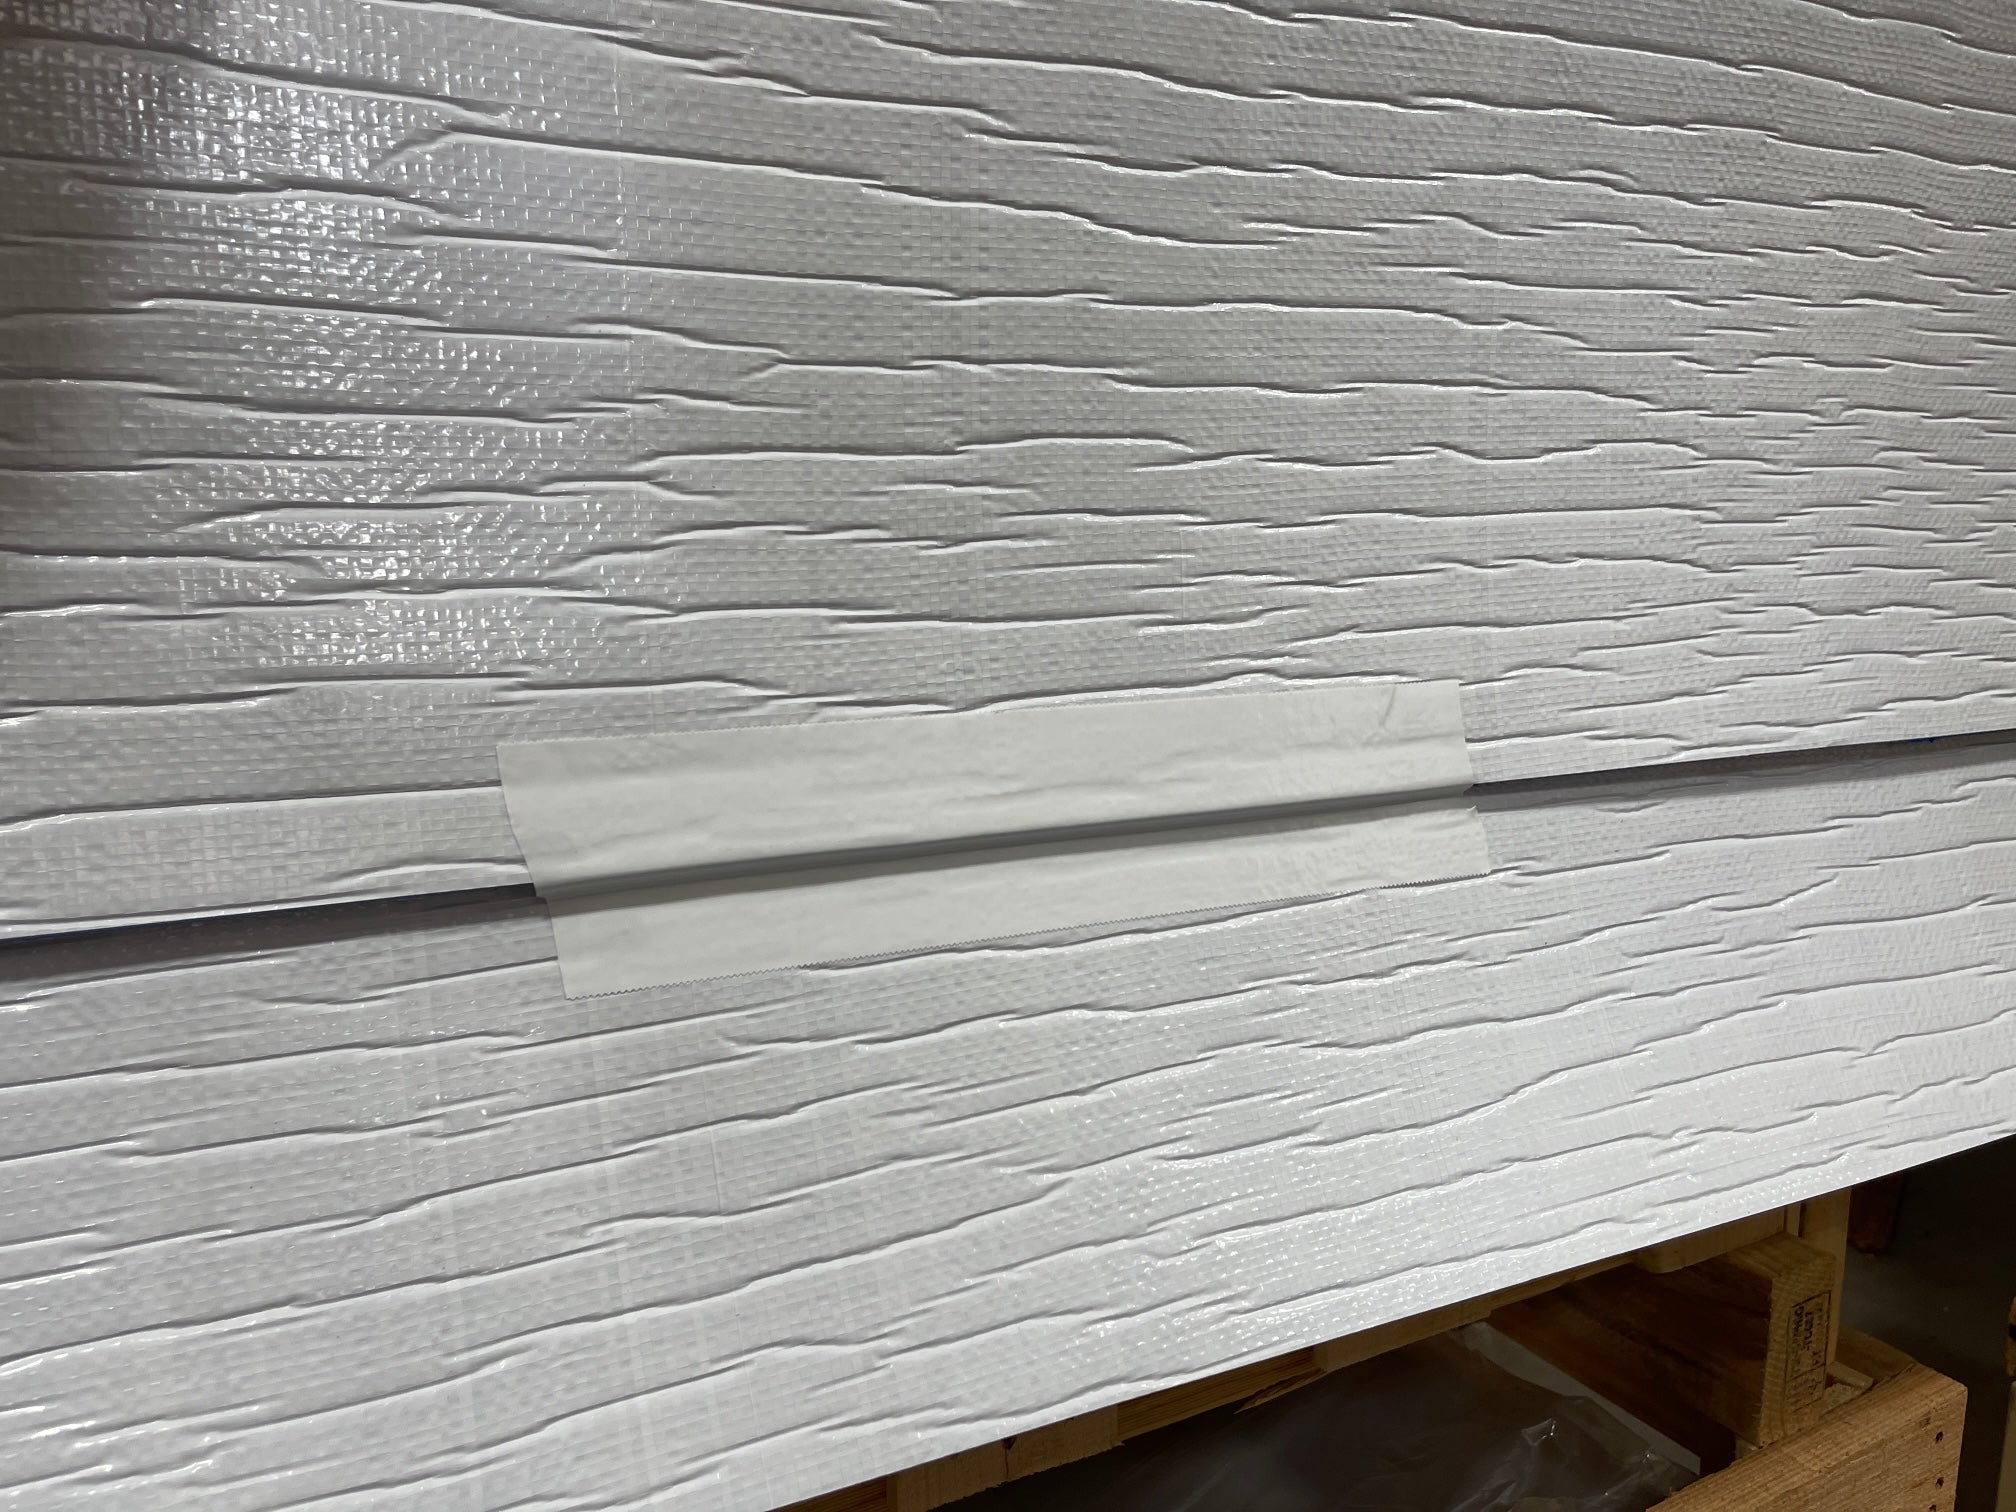 6 White Vapor Barrier Seam/Insulation Repair Tape – BlueTex Insulation